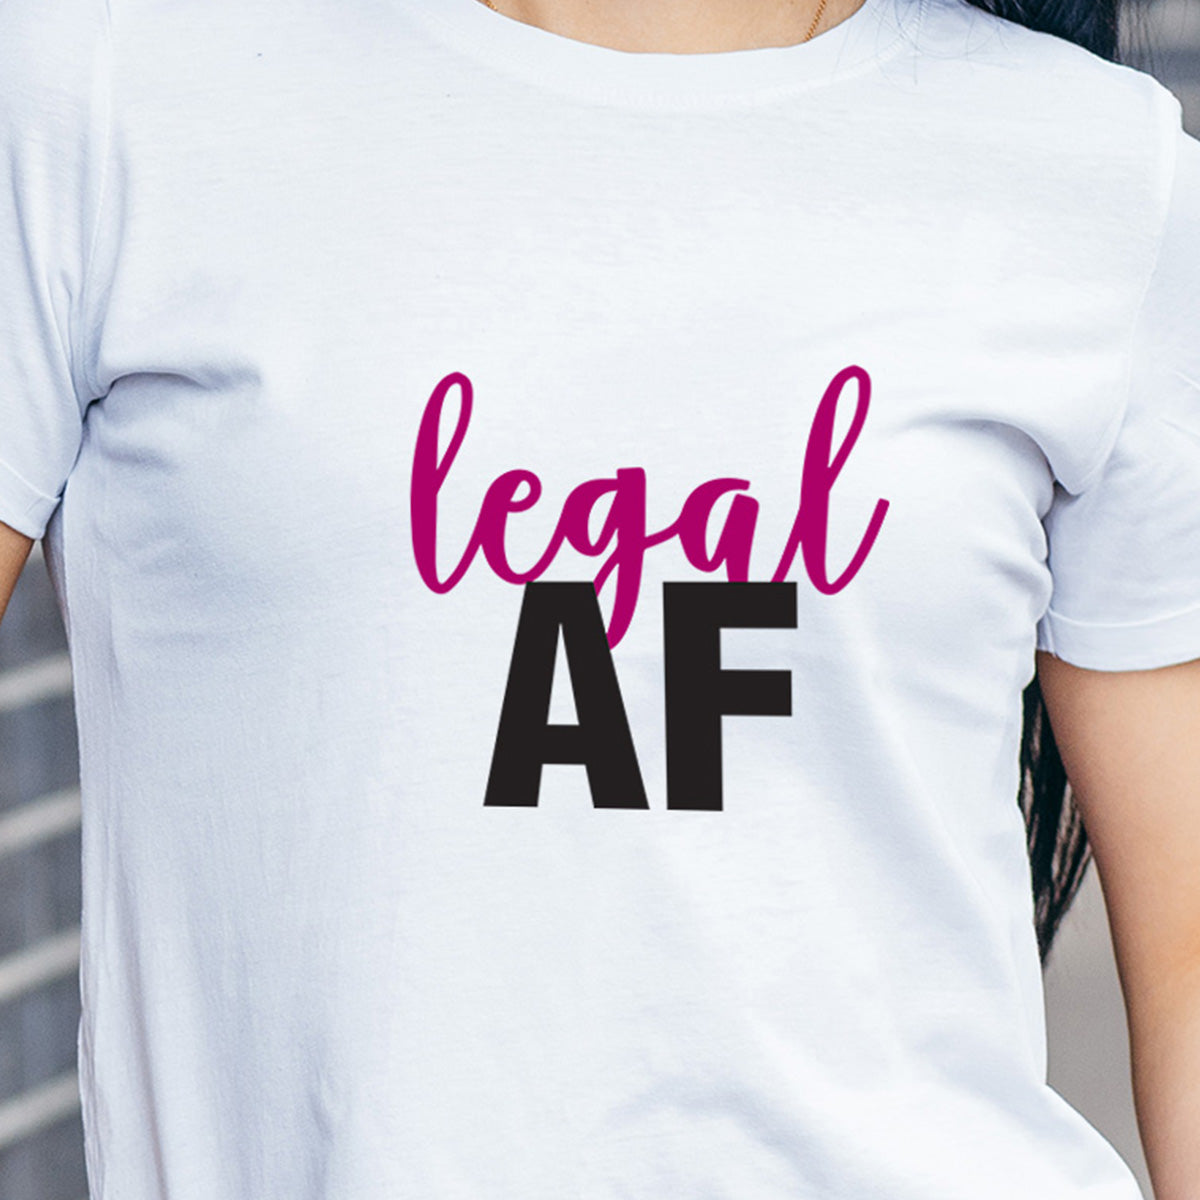 Legal AF - Printed Cotton T- Shirt - White